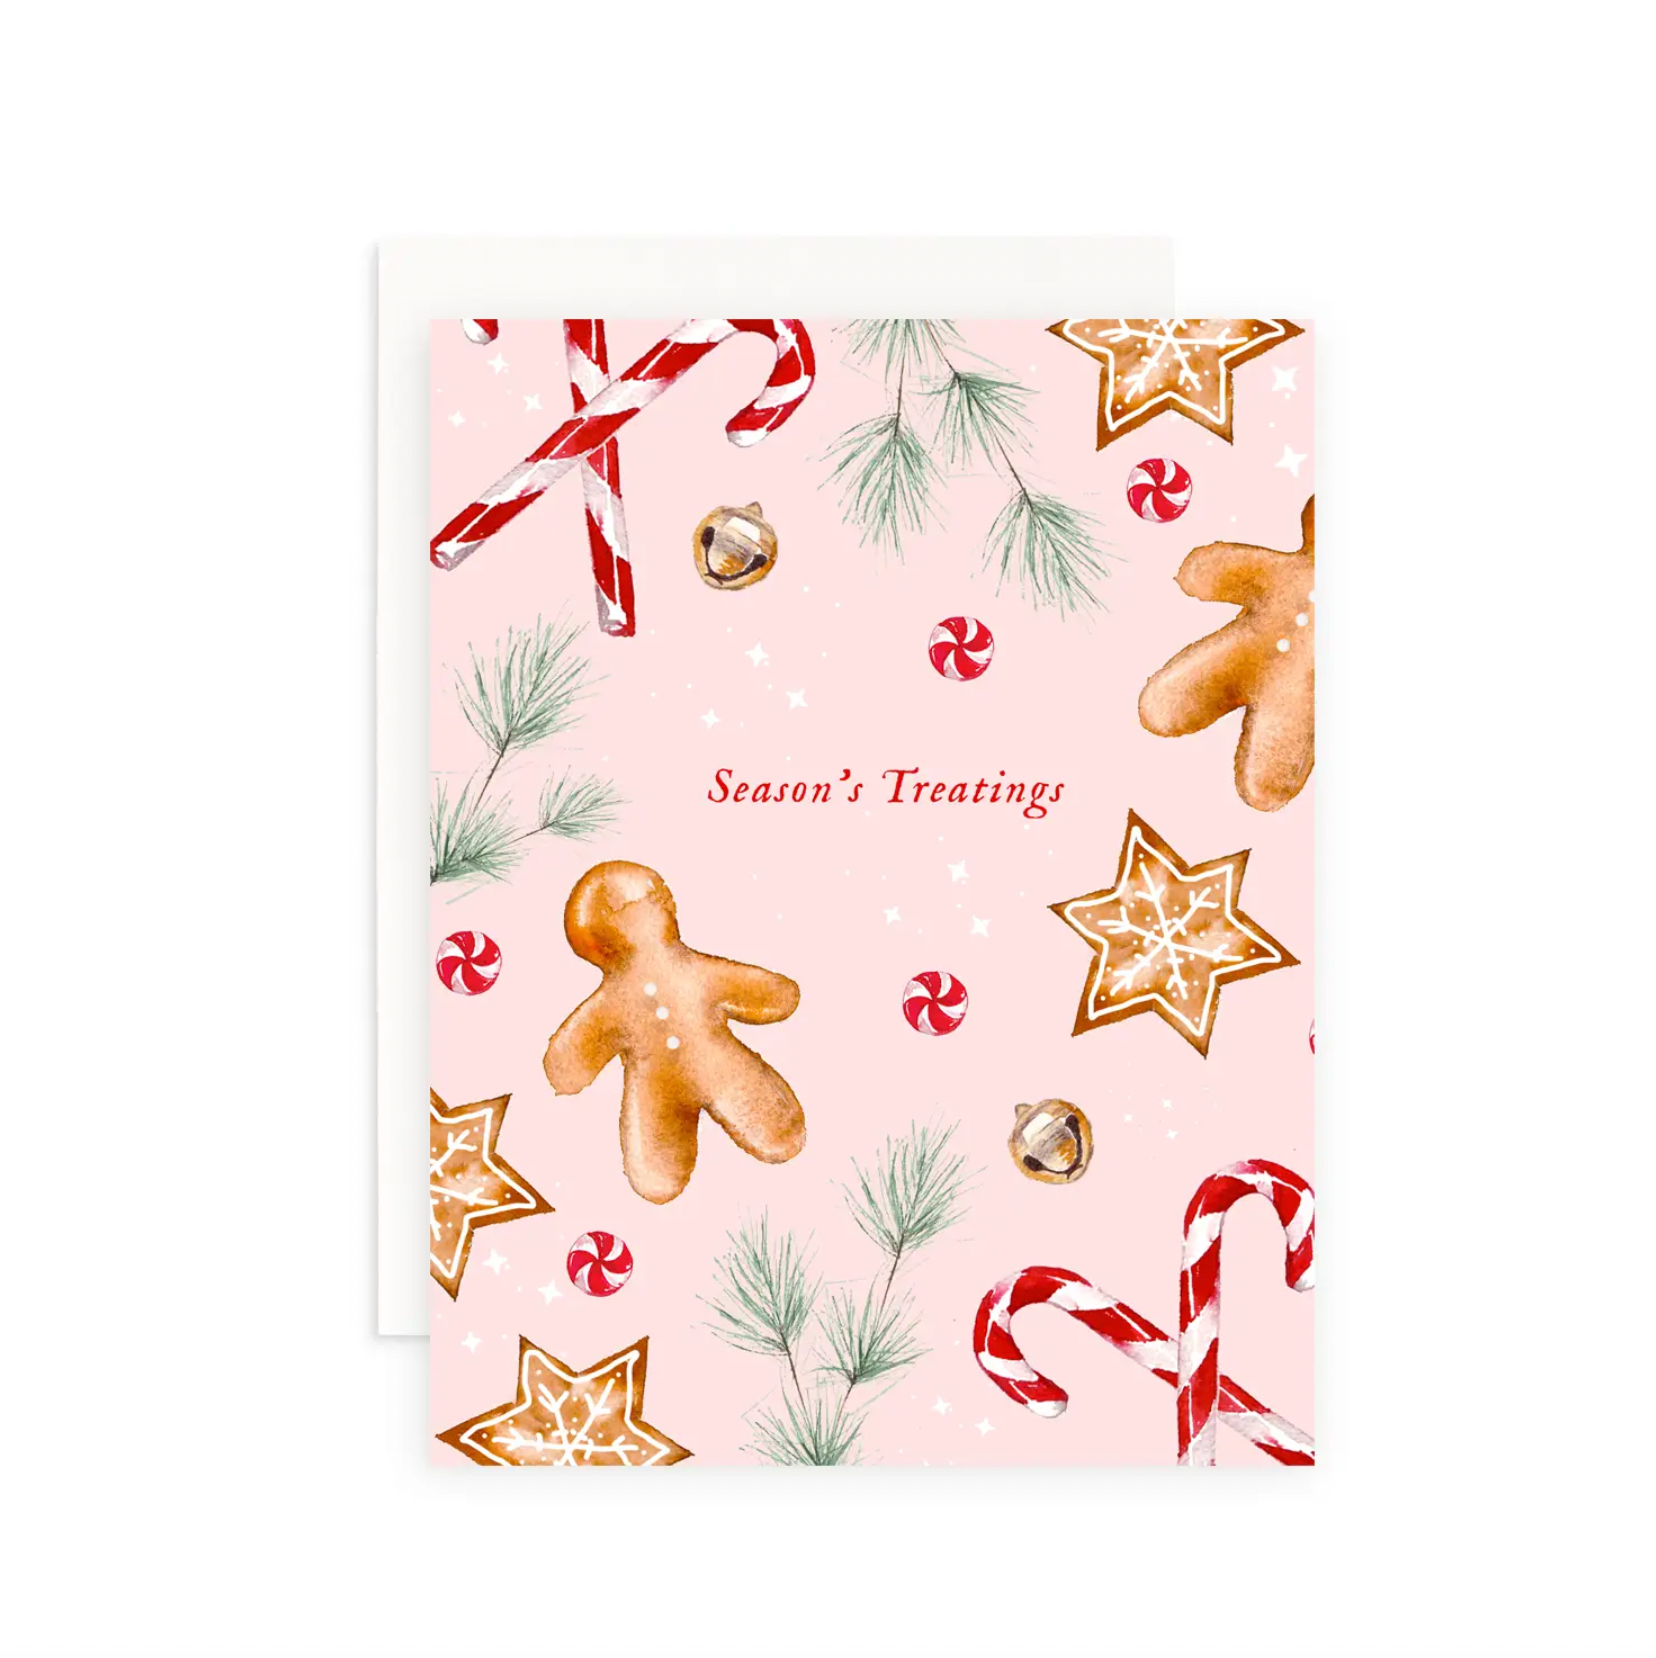 Season's Treatings Christmas Cookie Greeting Card